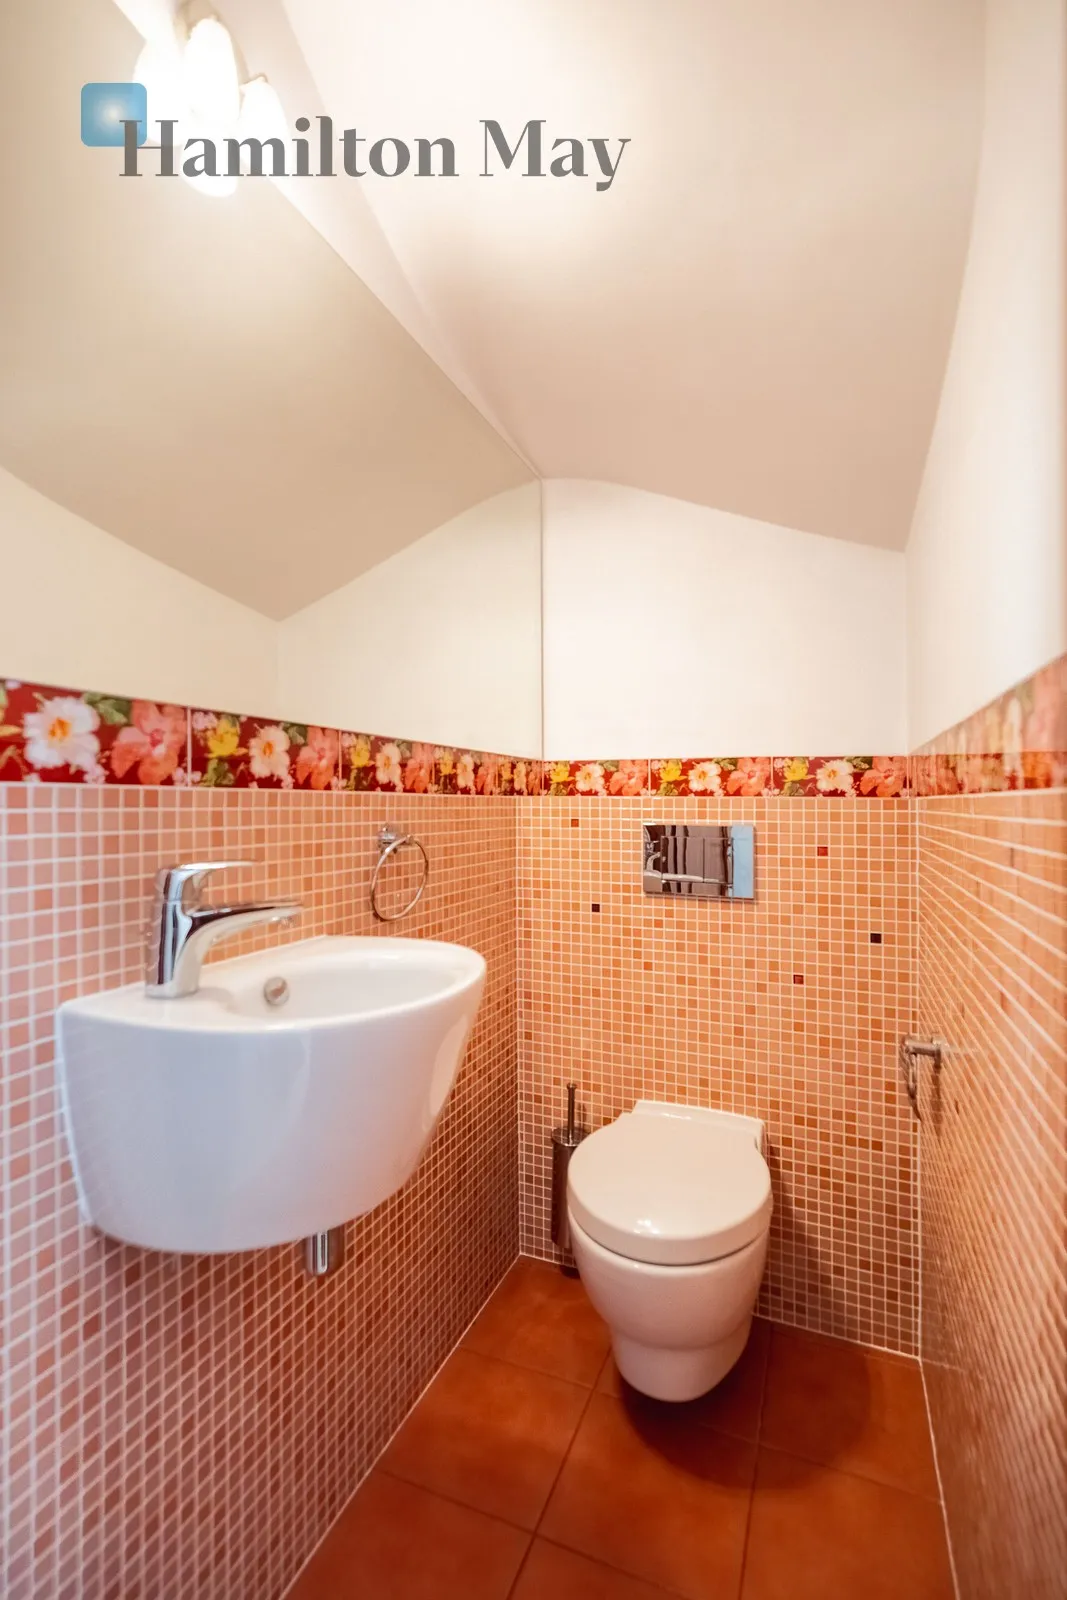 Bedrooms: 4 Bathrooms: 3 Plot size: 1000m2 Price/m2: 57 PLN